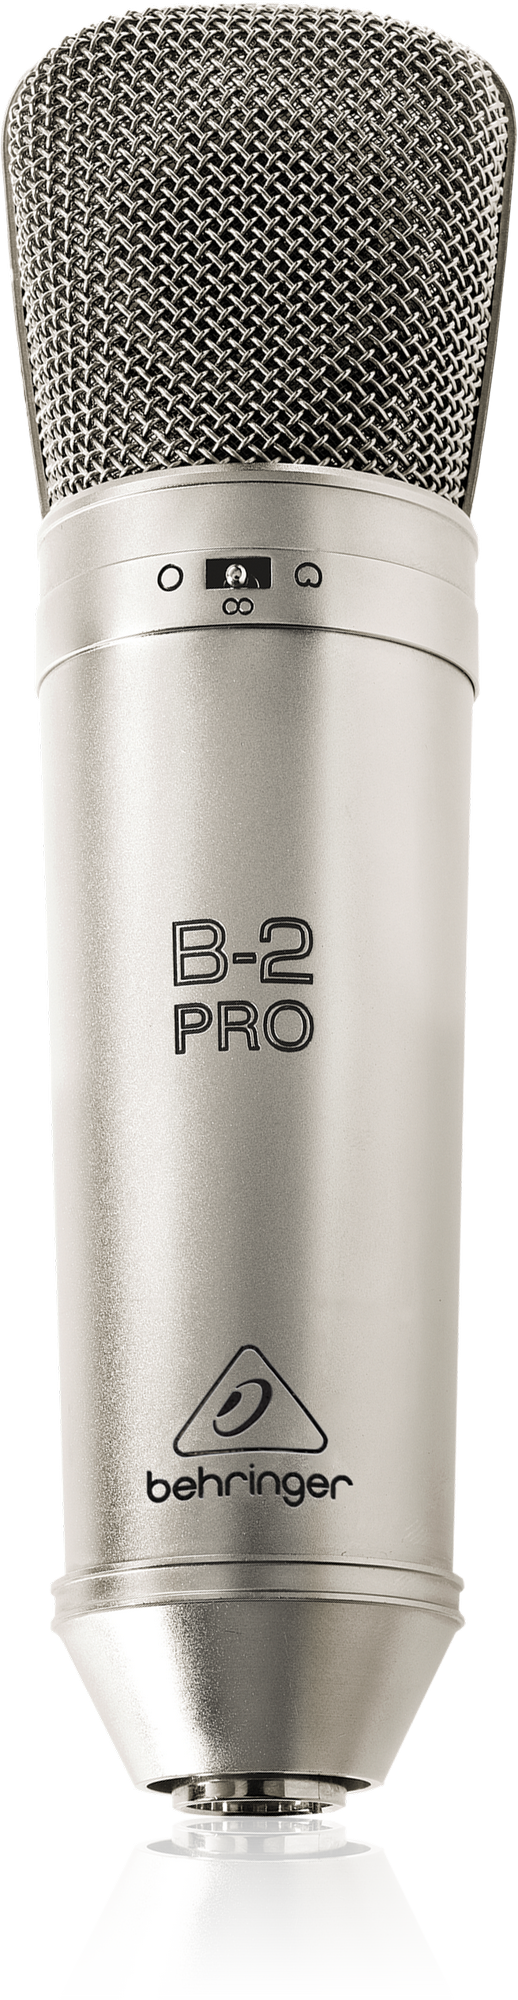 Behringer CONDENSER MICROPHONE B-2 PRO Gold-Sputtered Large Dual-Diaphragm Studio Condenser Microphone